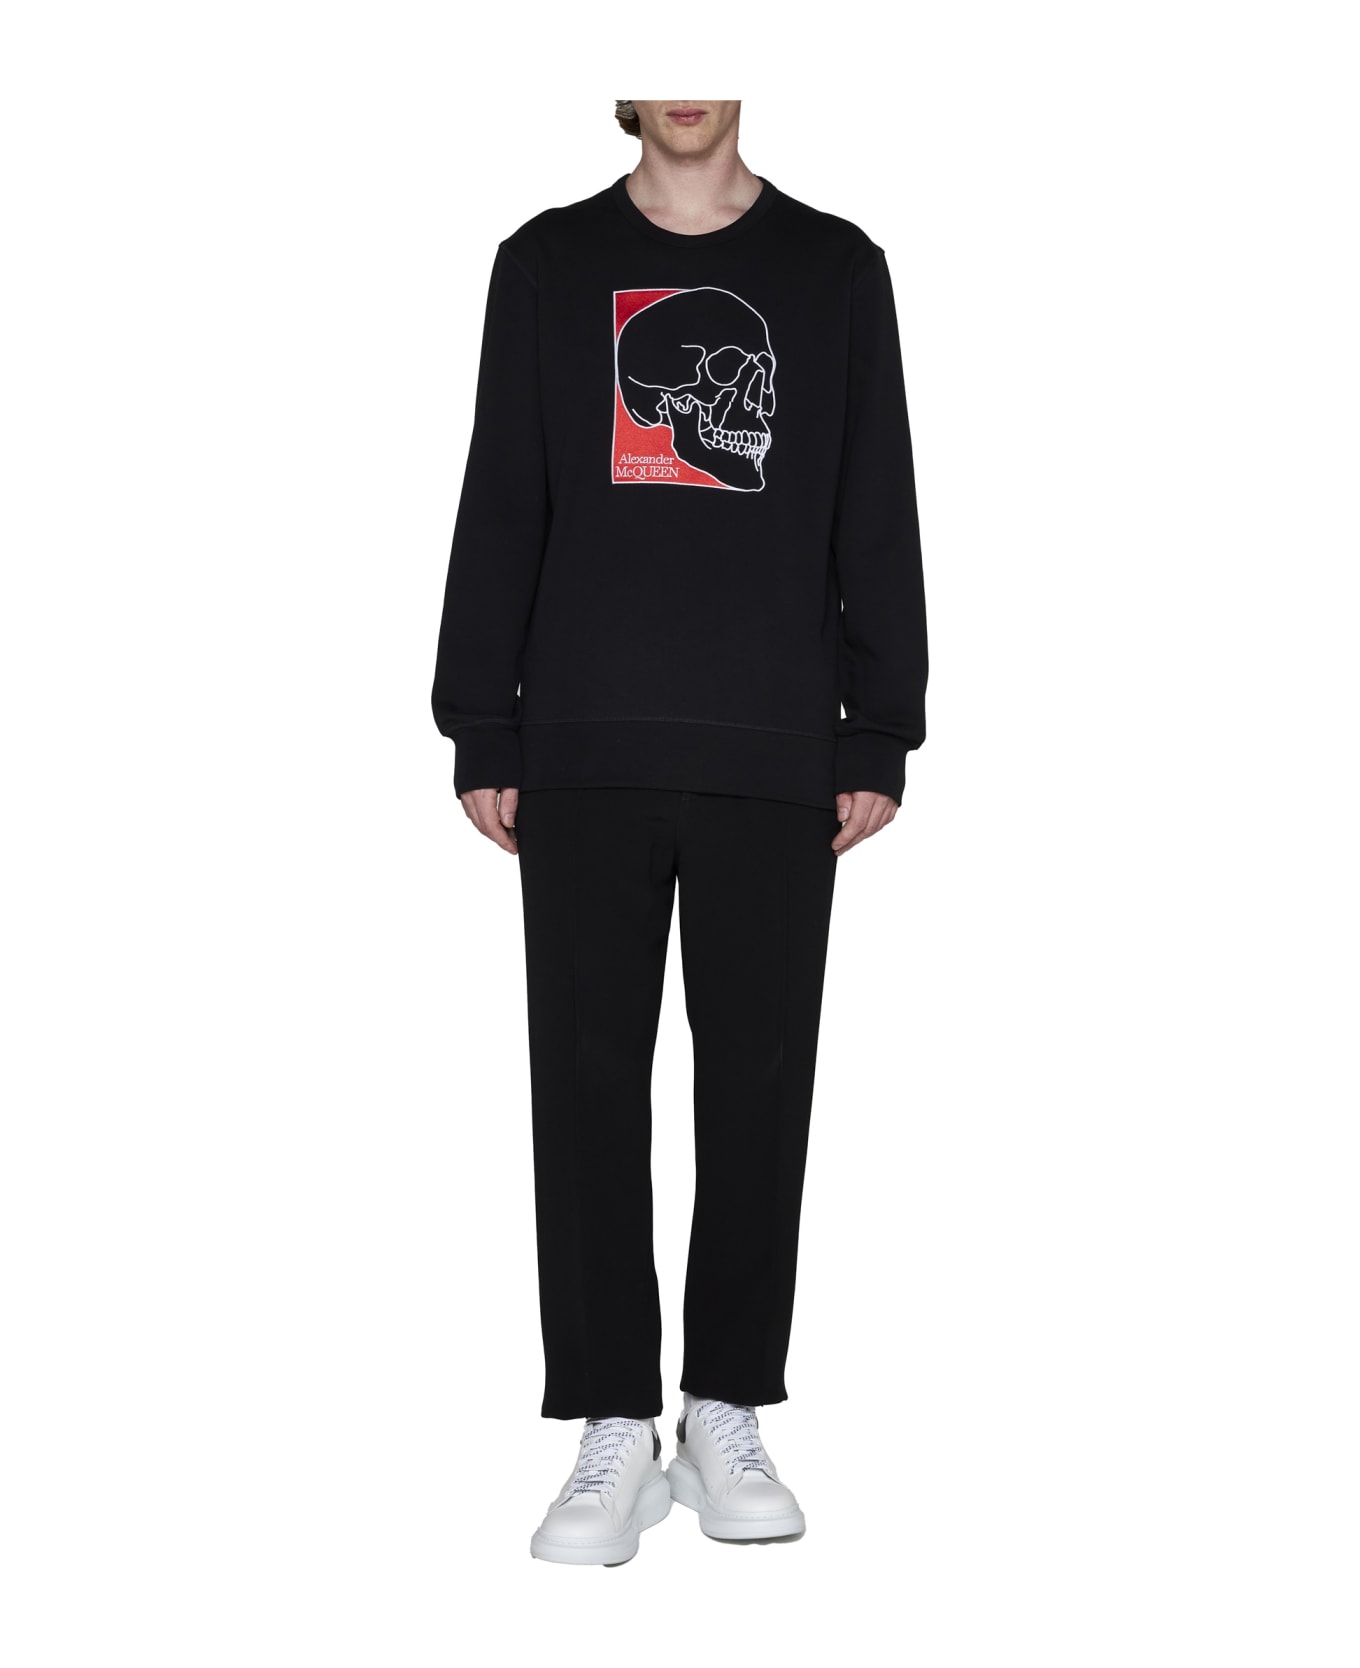 Alexander McQueen Logo Embroidery Sweatshirt - Black